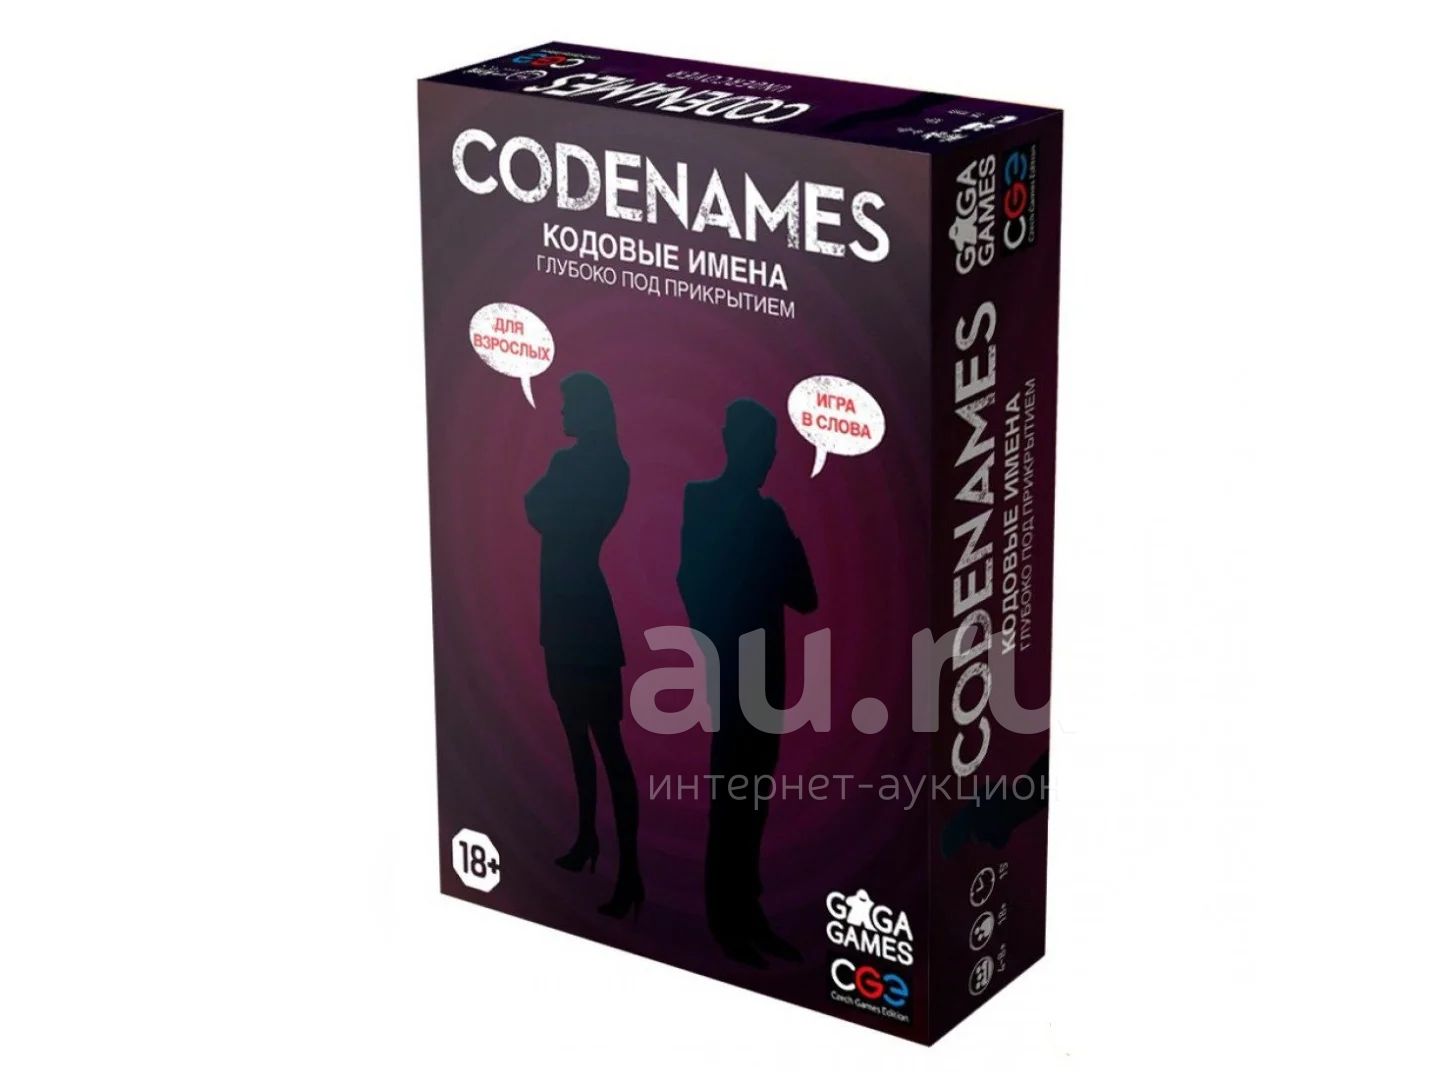 Code name game. Настольная игра коднеймс. Настольная игра кодовые имена (Codenames).